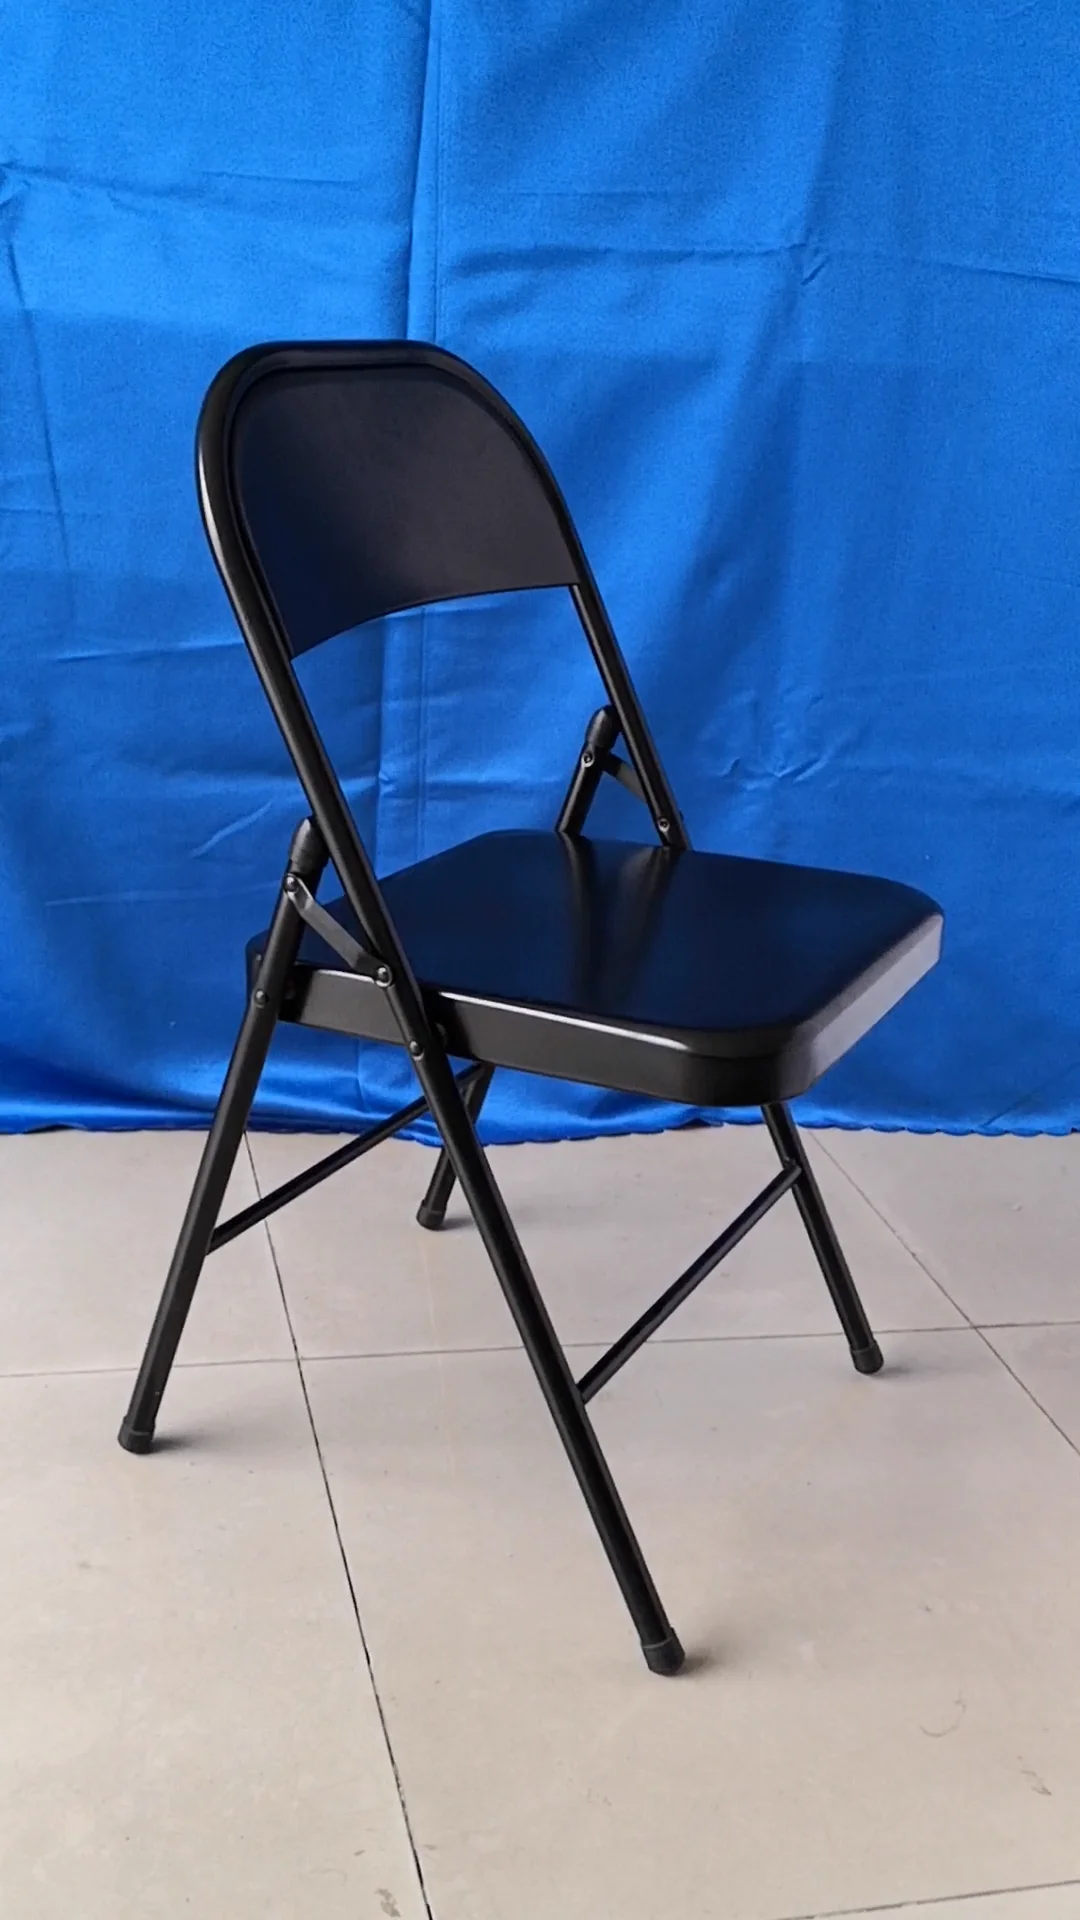 Wholesale Steel Folding Chair - Buy Wholesale Folding Chairs,Folding